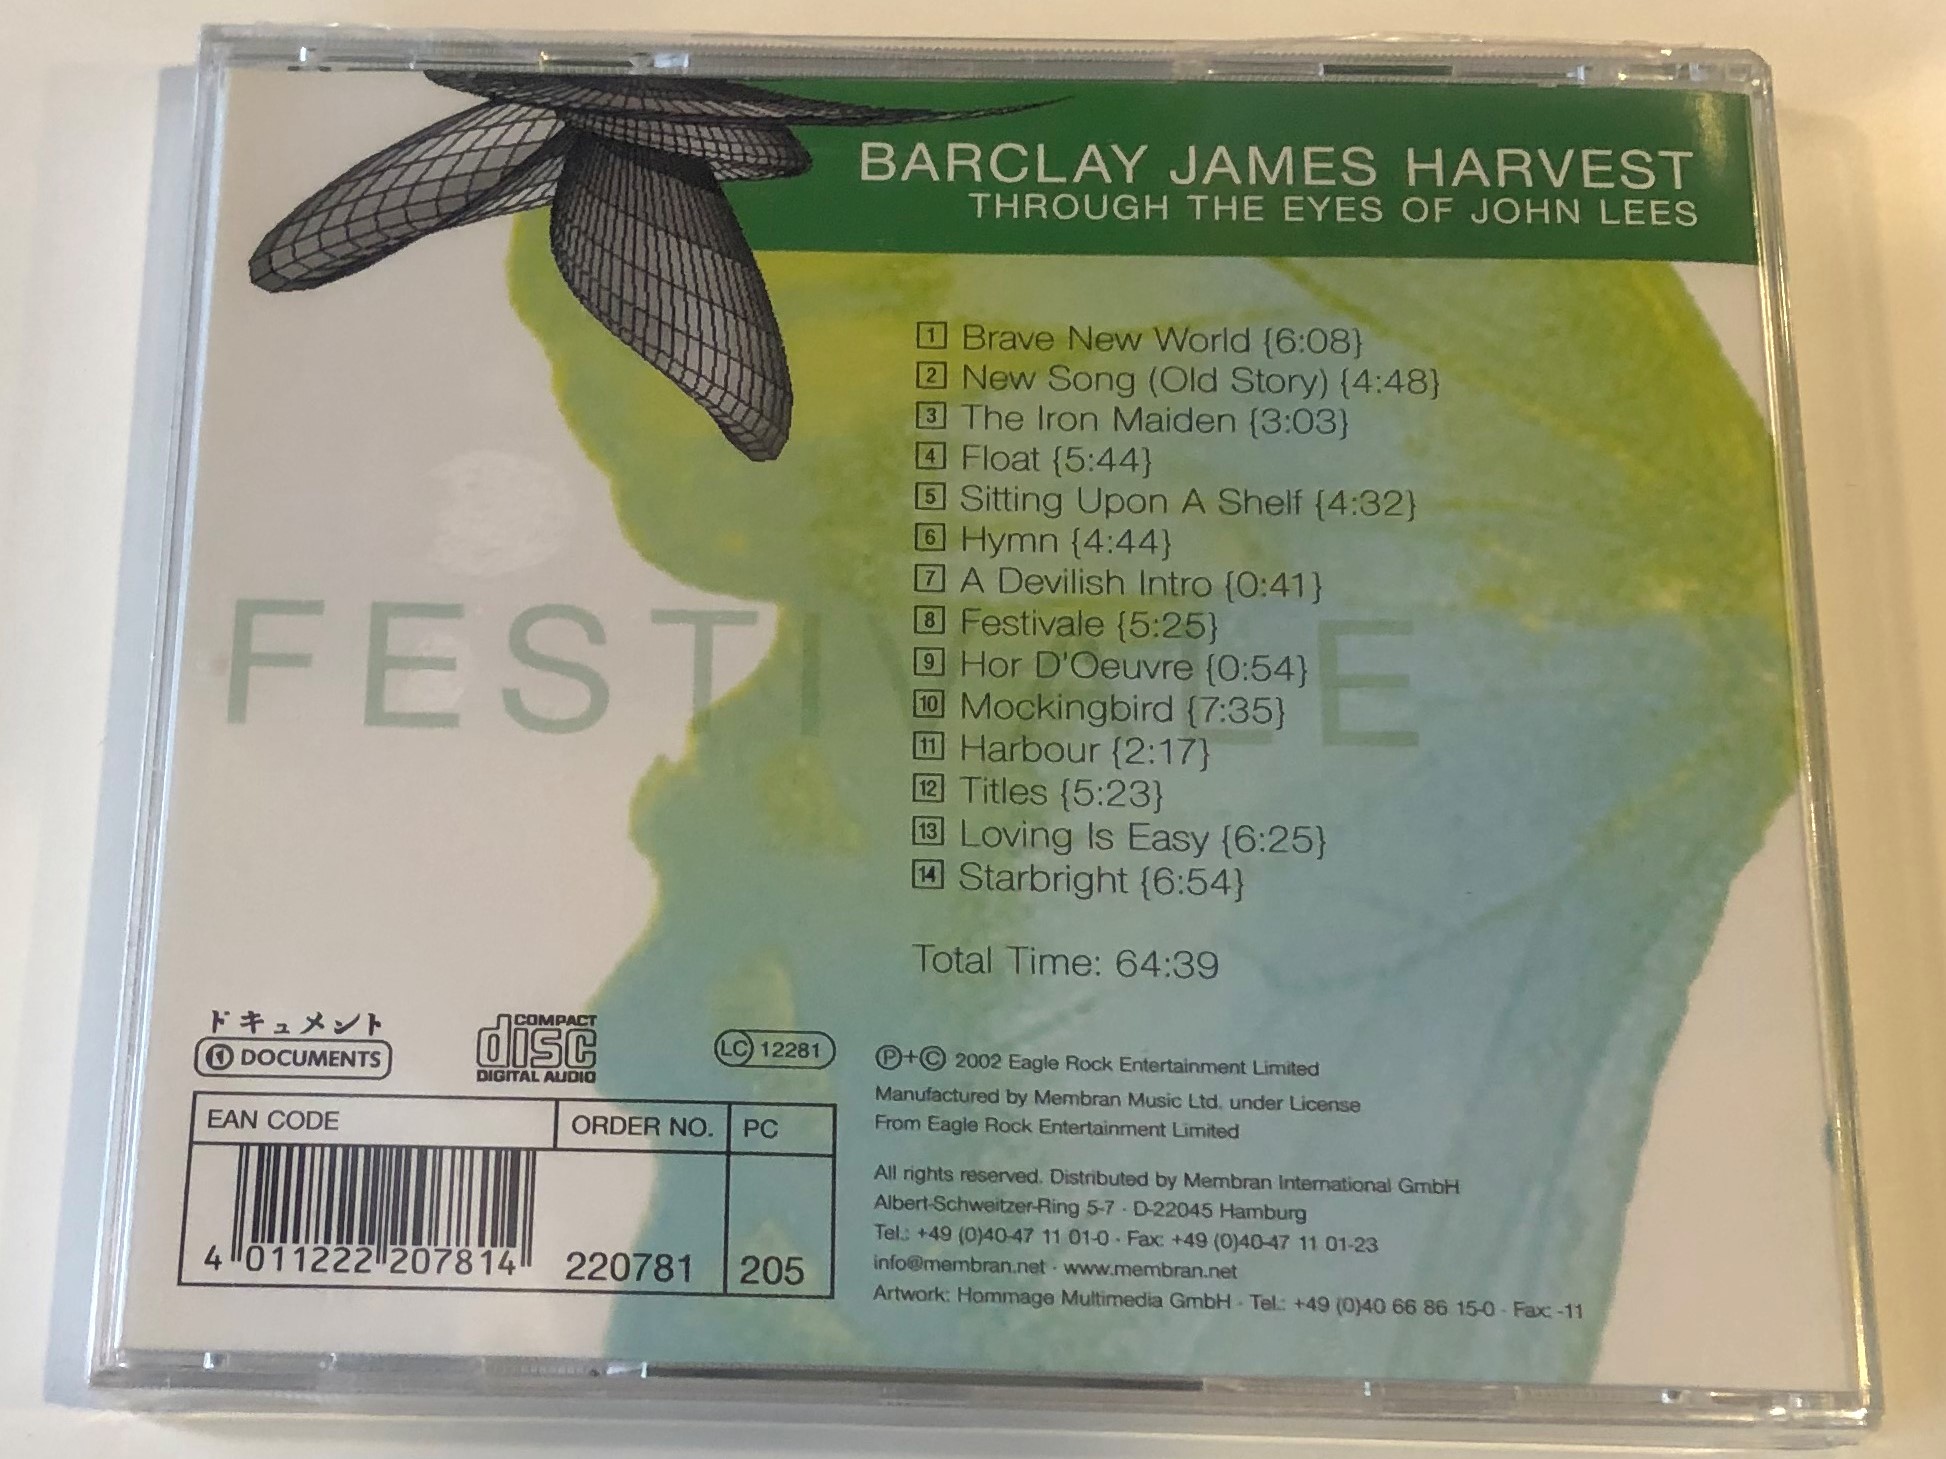 barclay-james-harvest-through-the-eyes-of-john-lees-festivale-loving-is-easy-float-mockingbird-hymn-herbour-documents-audio-cd-2002-220781-205-2-.jpg